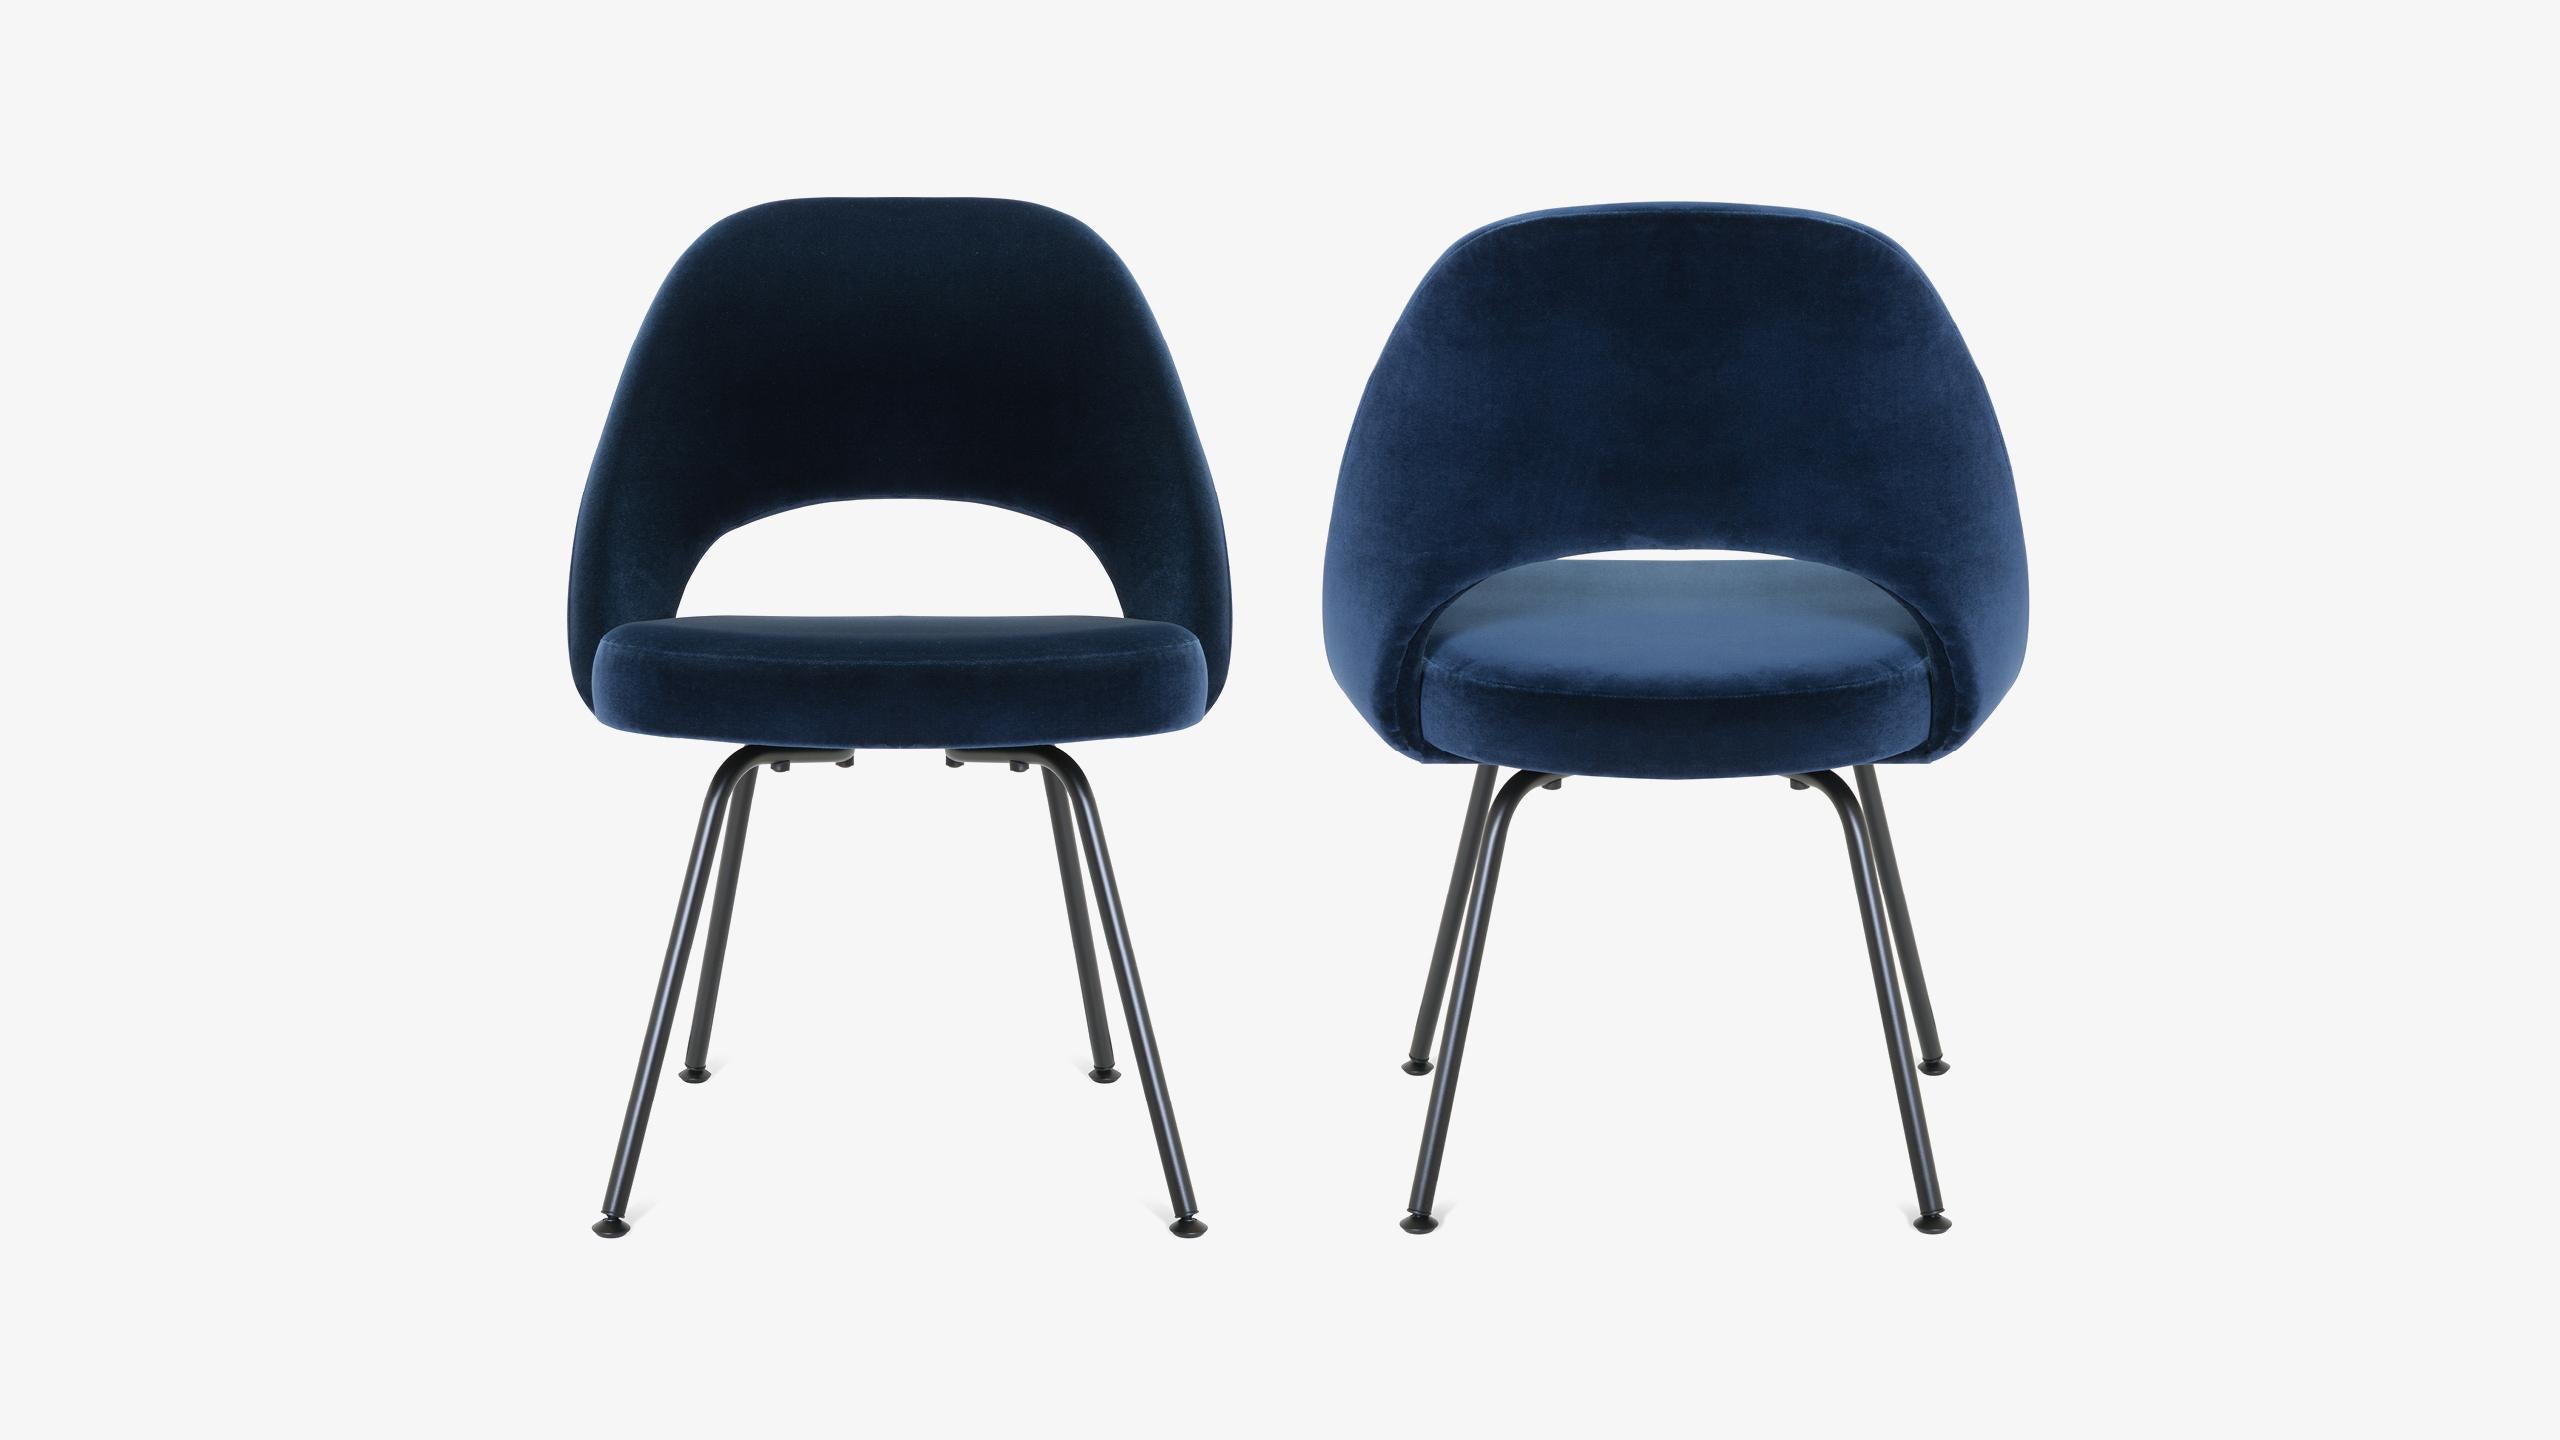 Mid-Century Modern Saarinen fauteuils de direction sans accoudoirs en velours bleu marine, mat obsidienne en vente